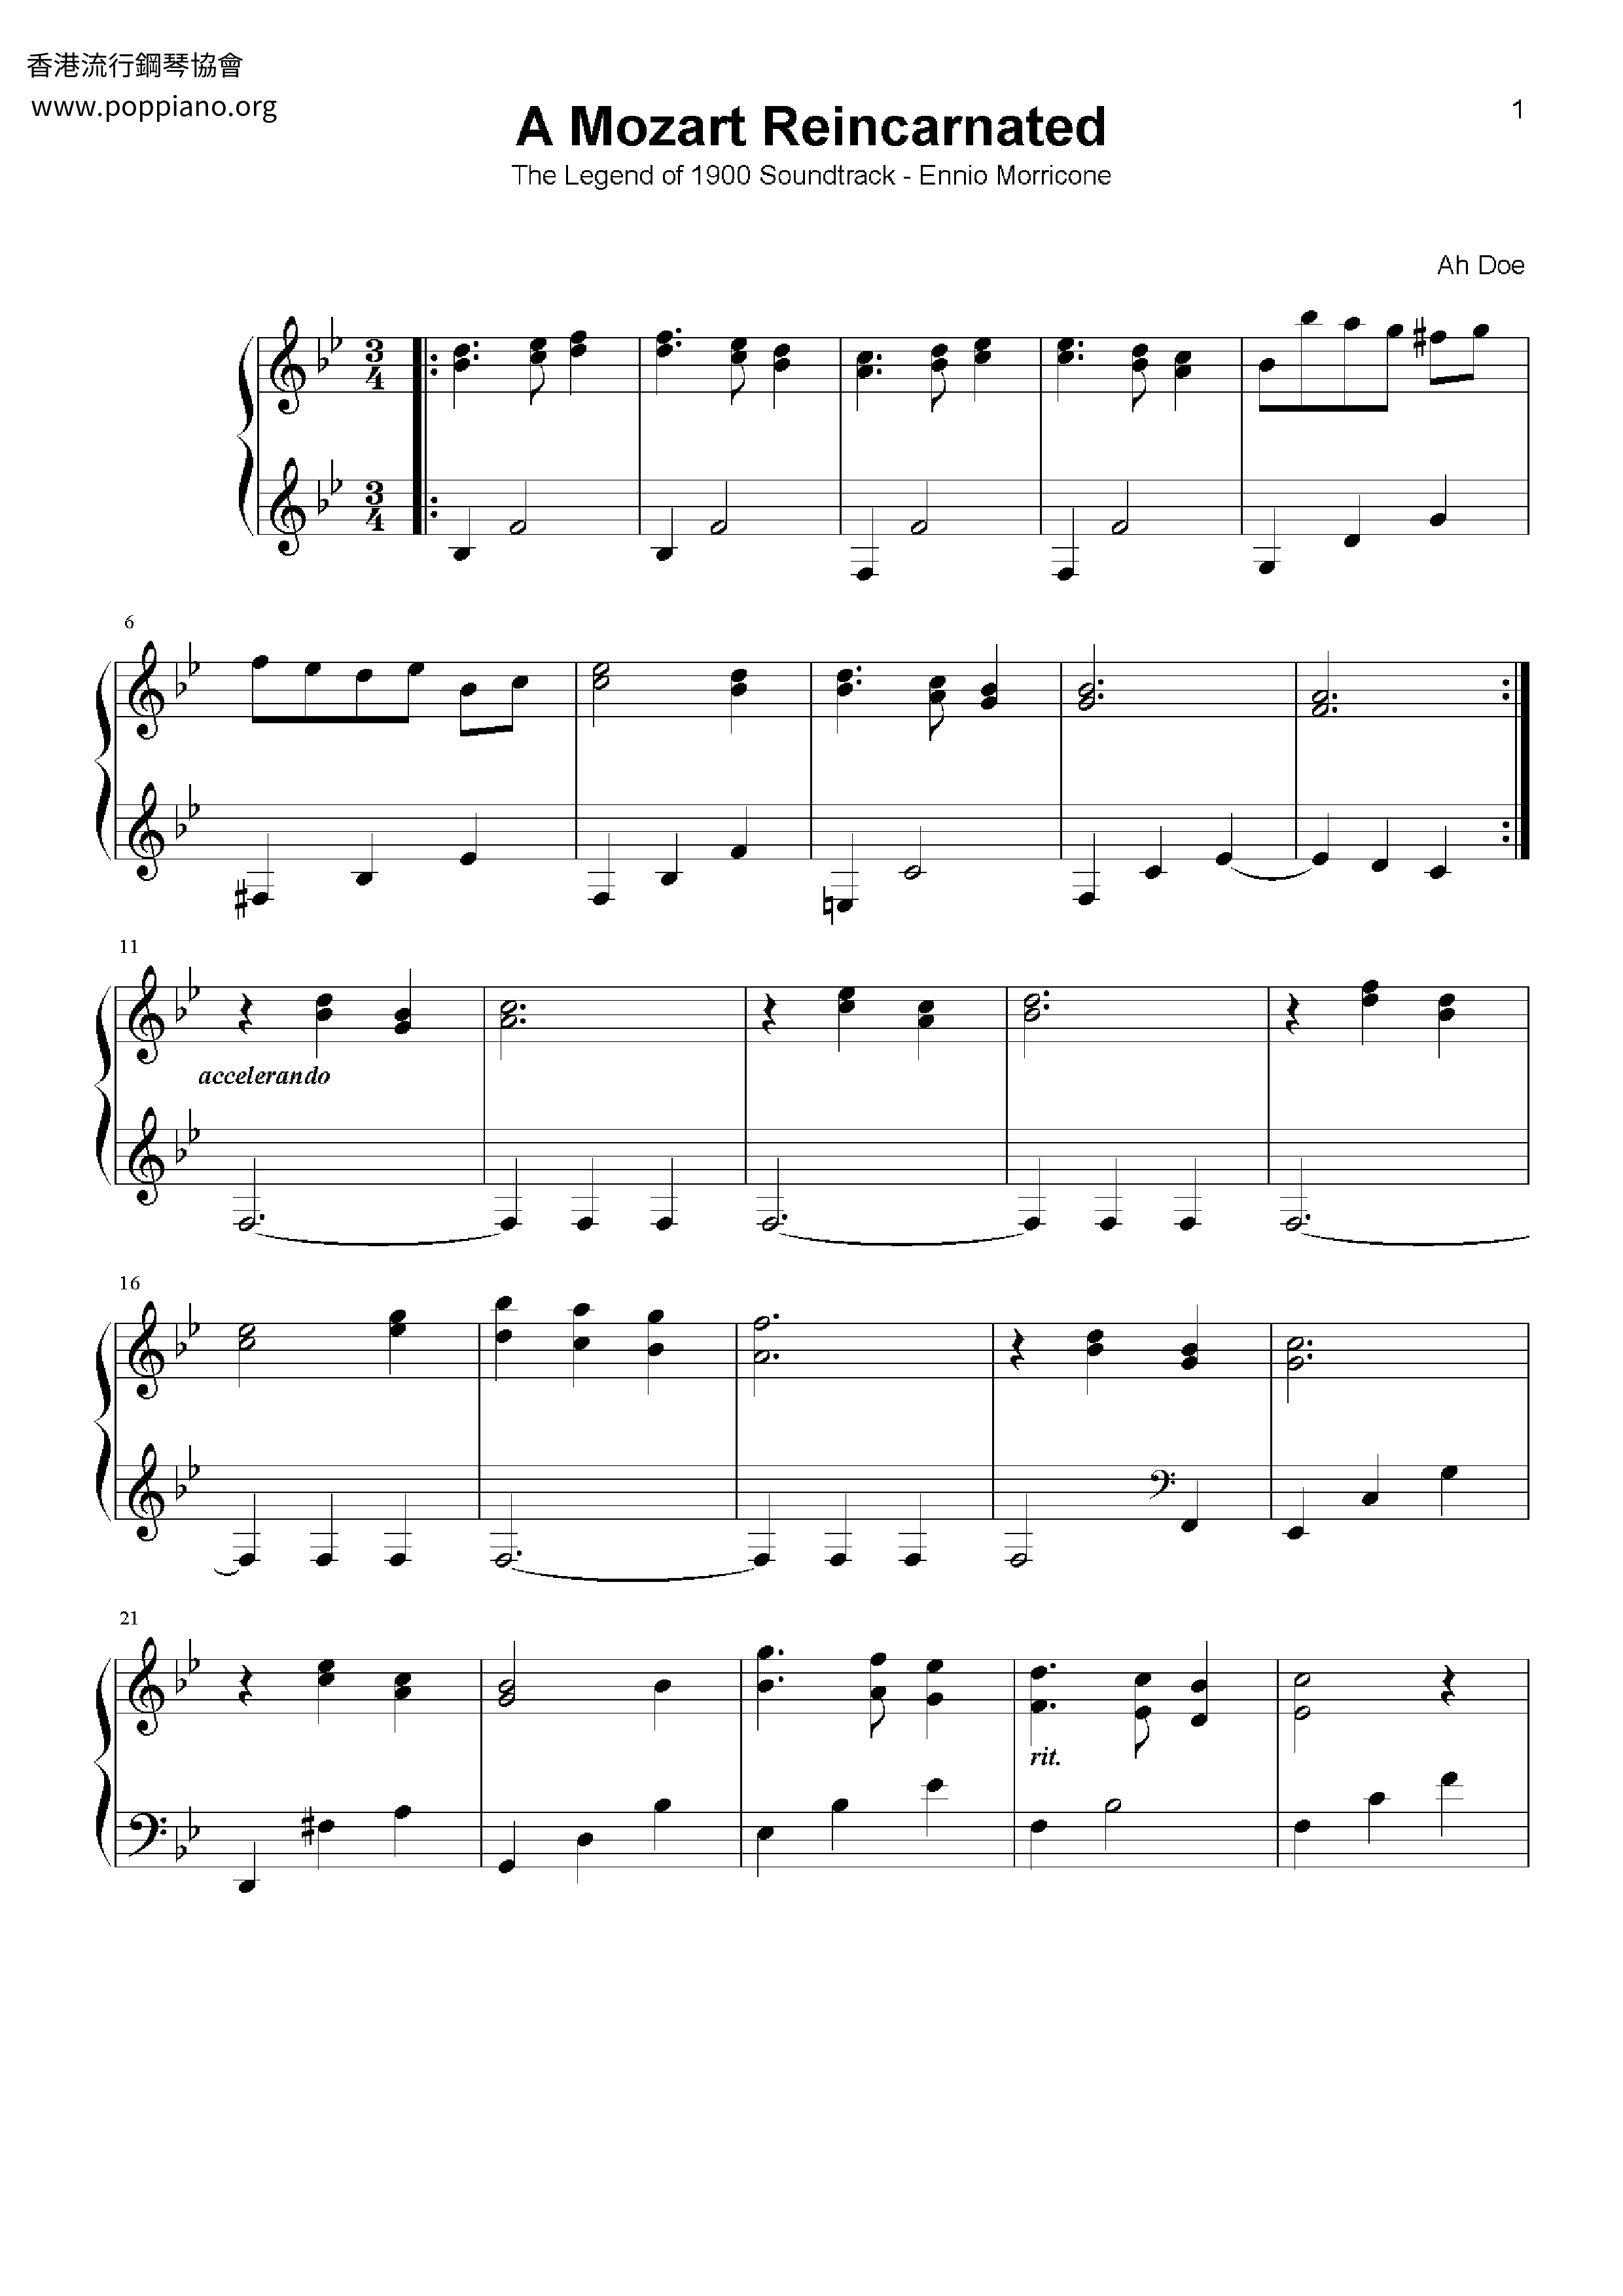 A Mozart Reincarnated Score